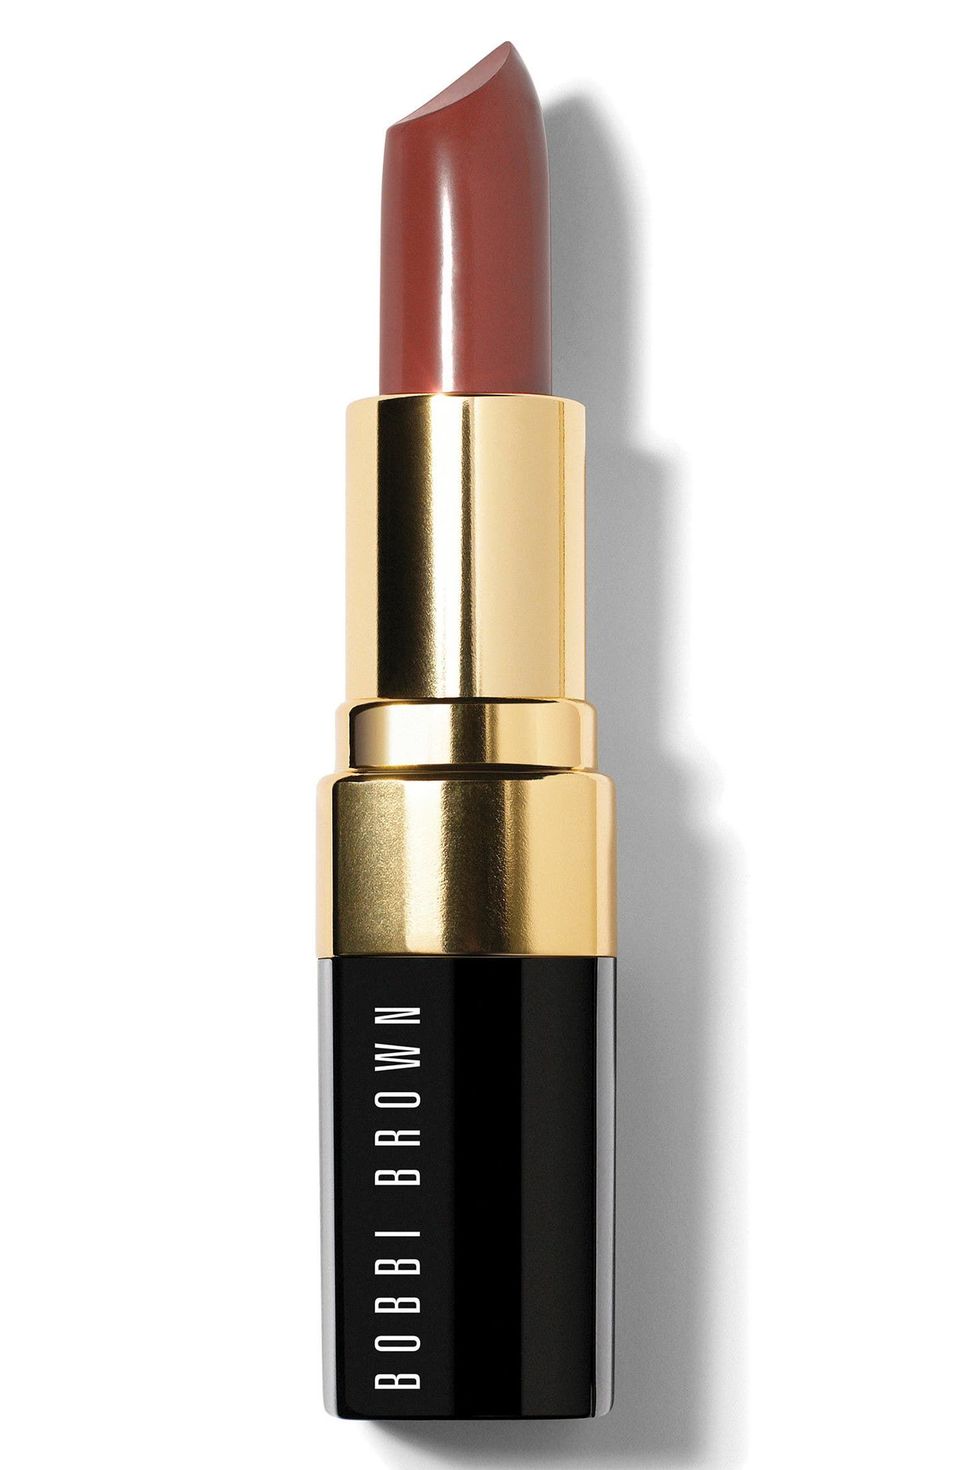 Bobbi Brown Lipstick in Brown